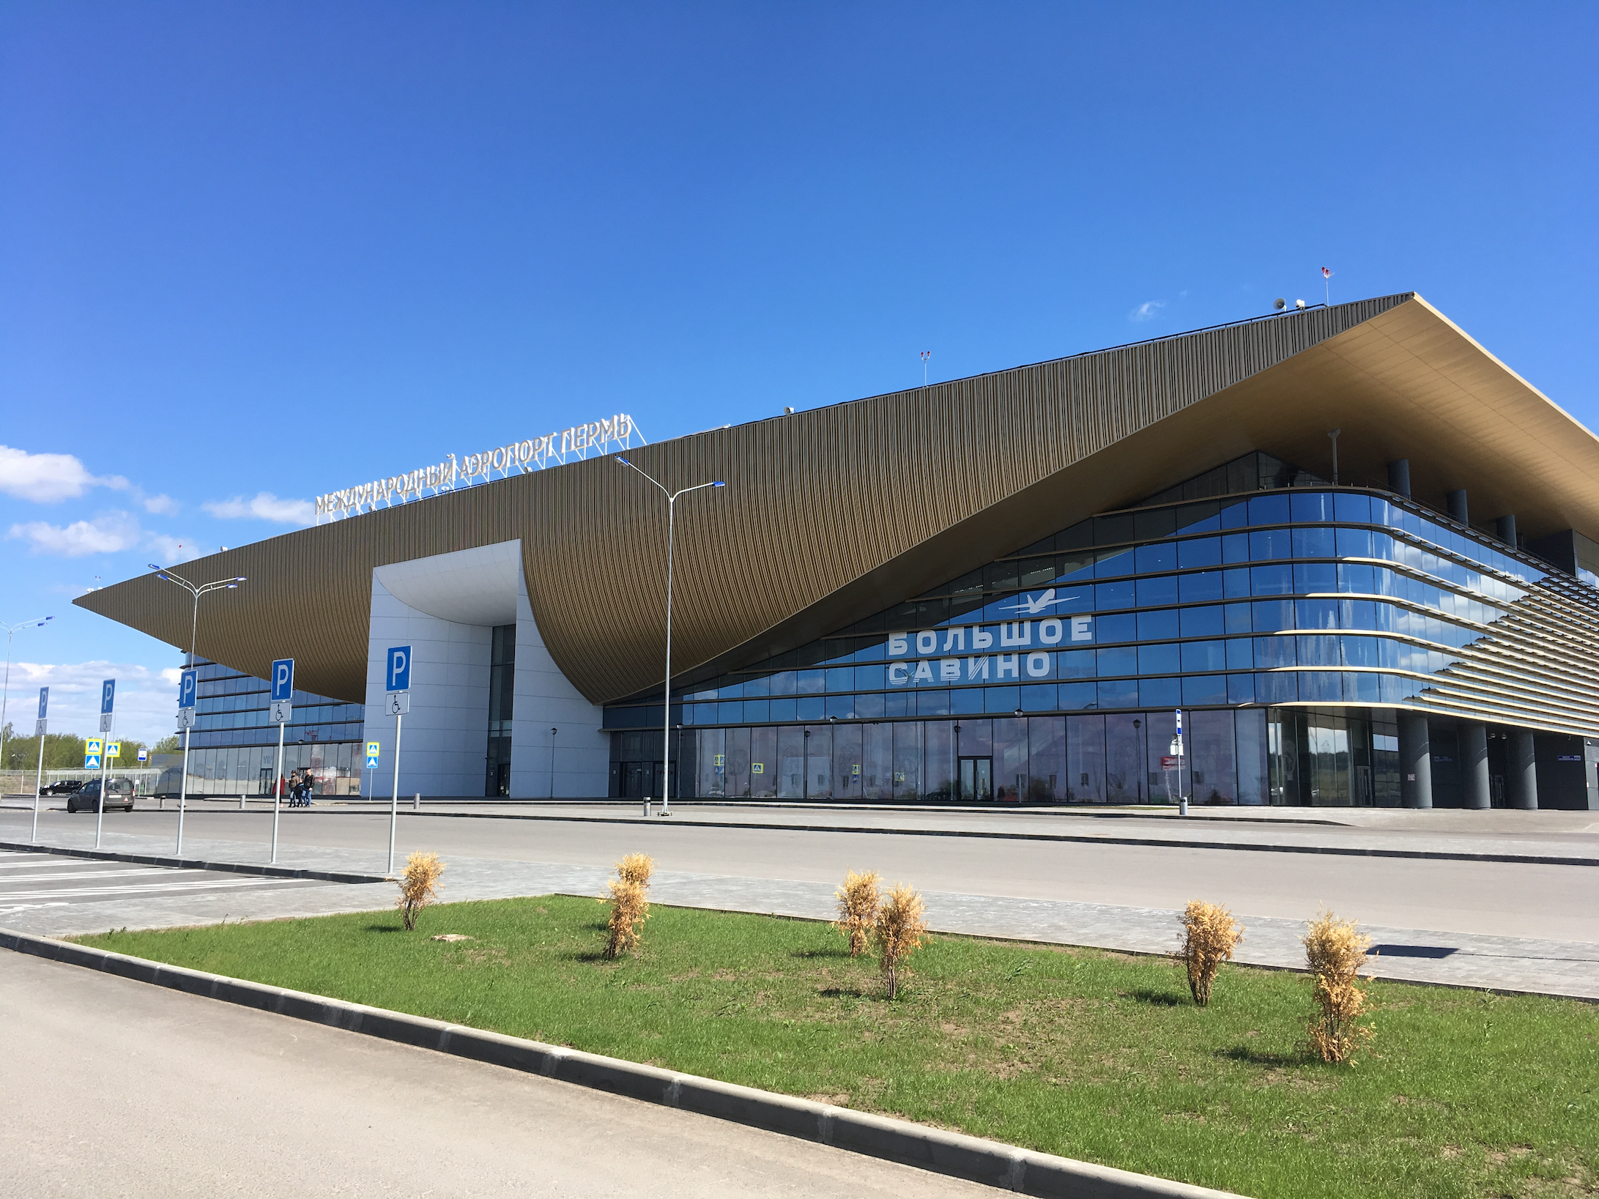 Проект пермского аэропорта по ошибке приписали архитектору из Испании